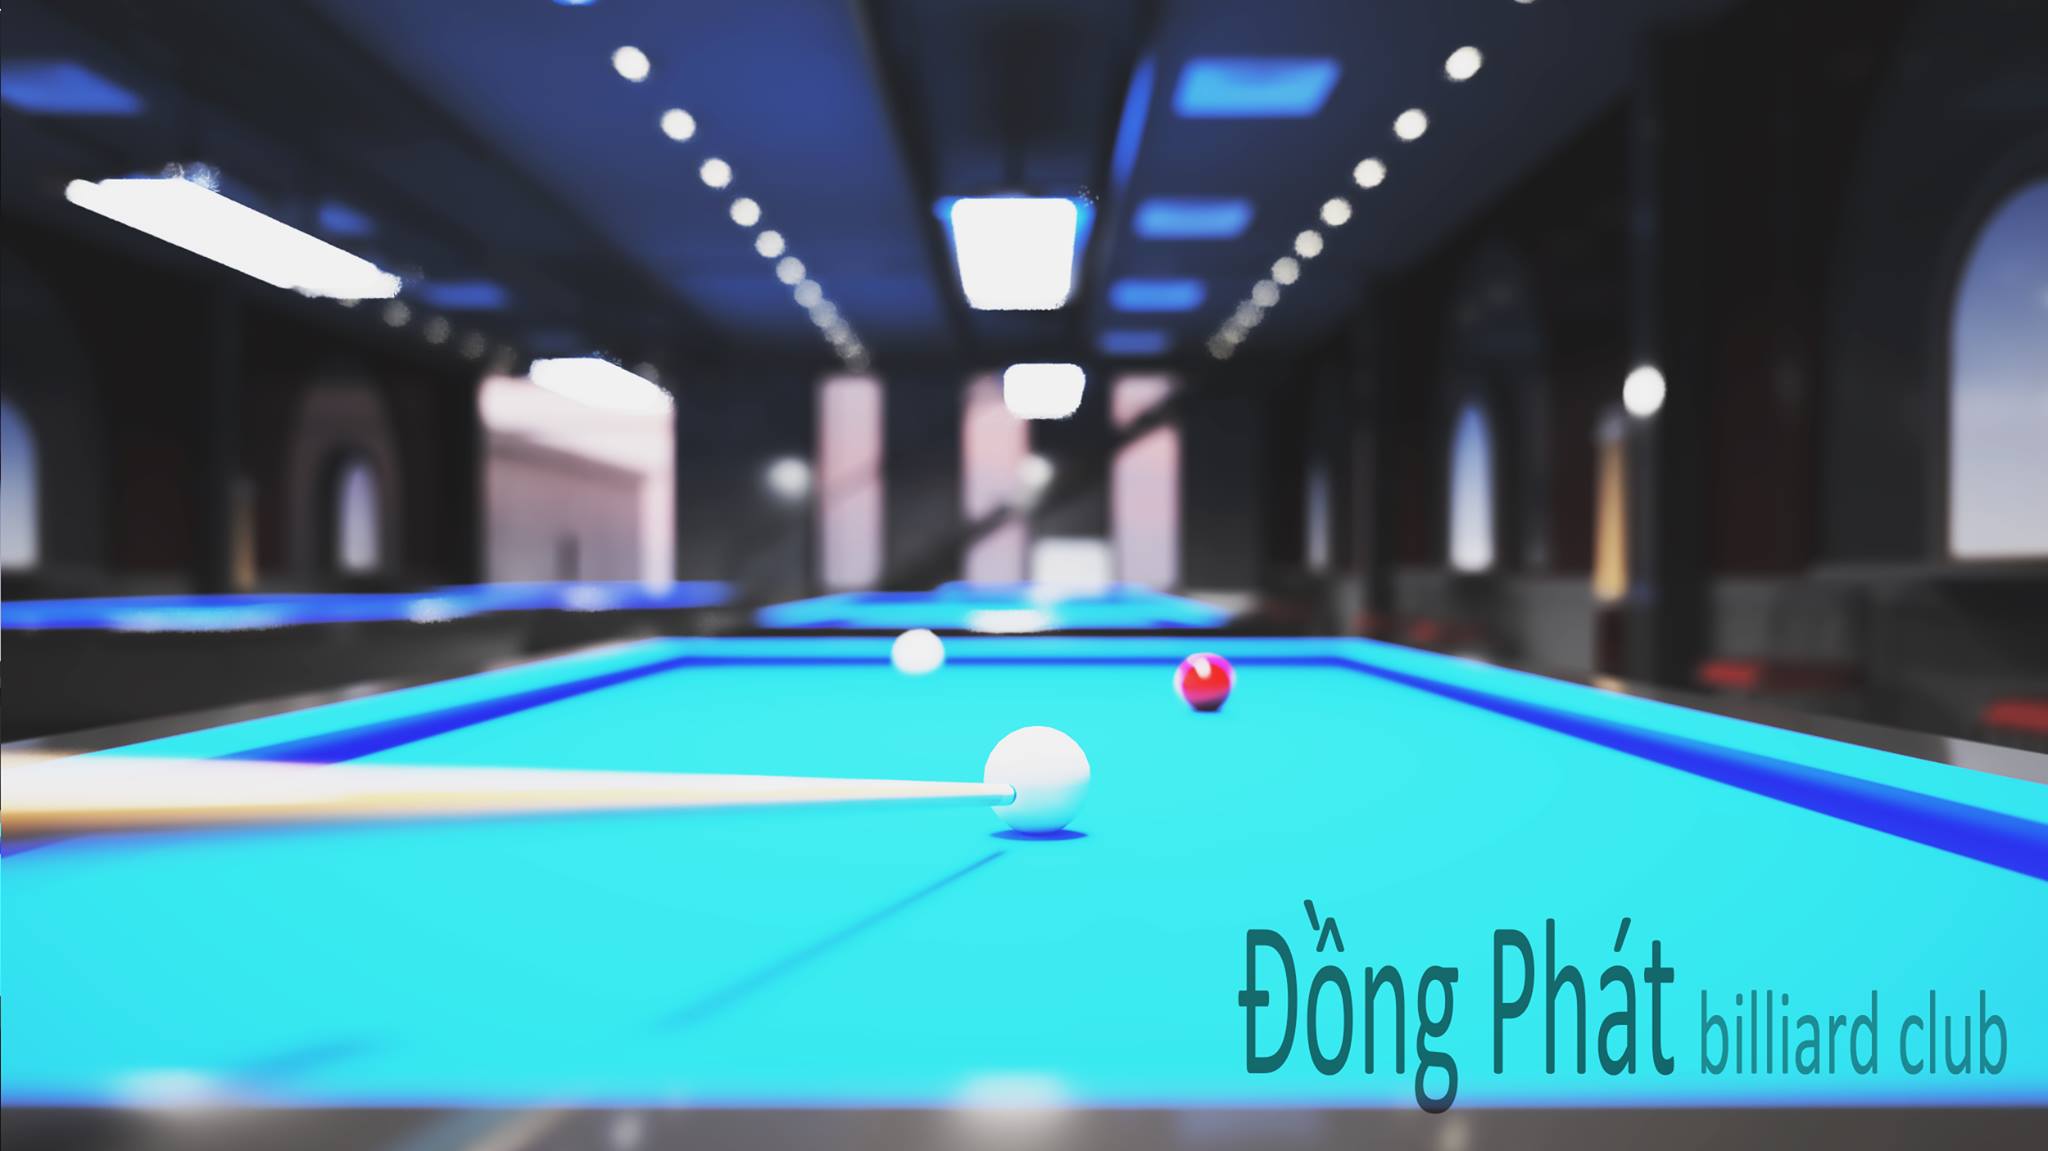 Dong Phat Billiard Club